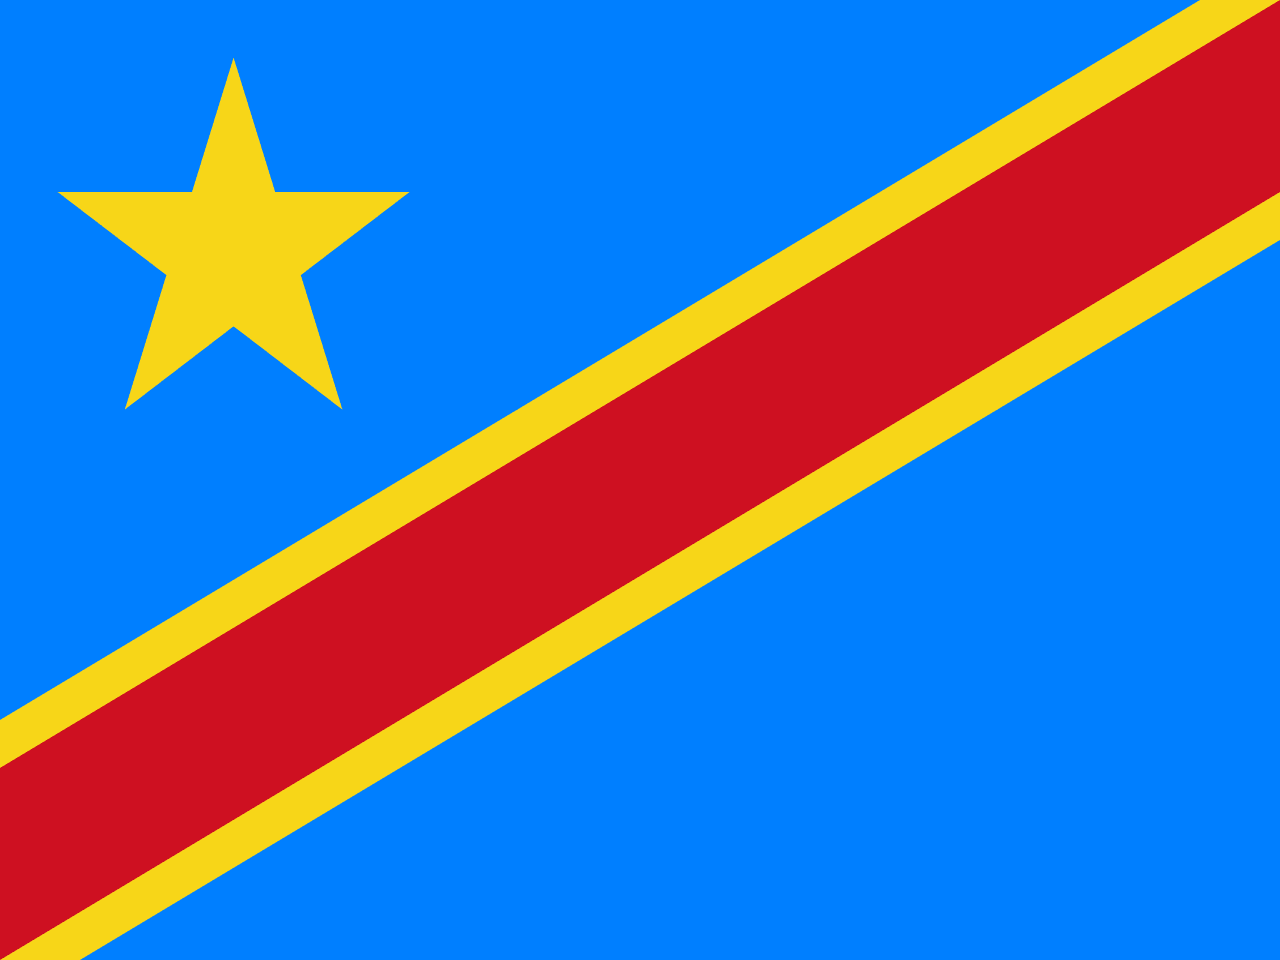 Democratic Republic of the Congo 3 x 5 Nylon Dyed Flag (USA Made).